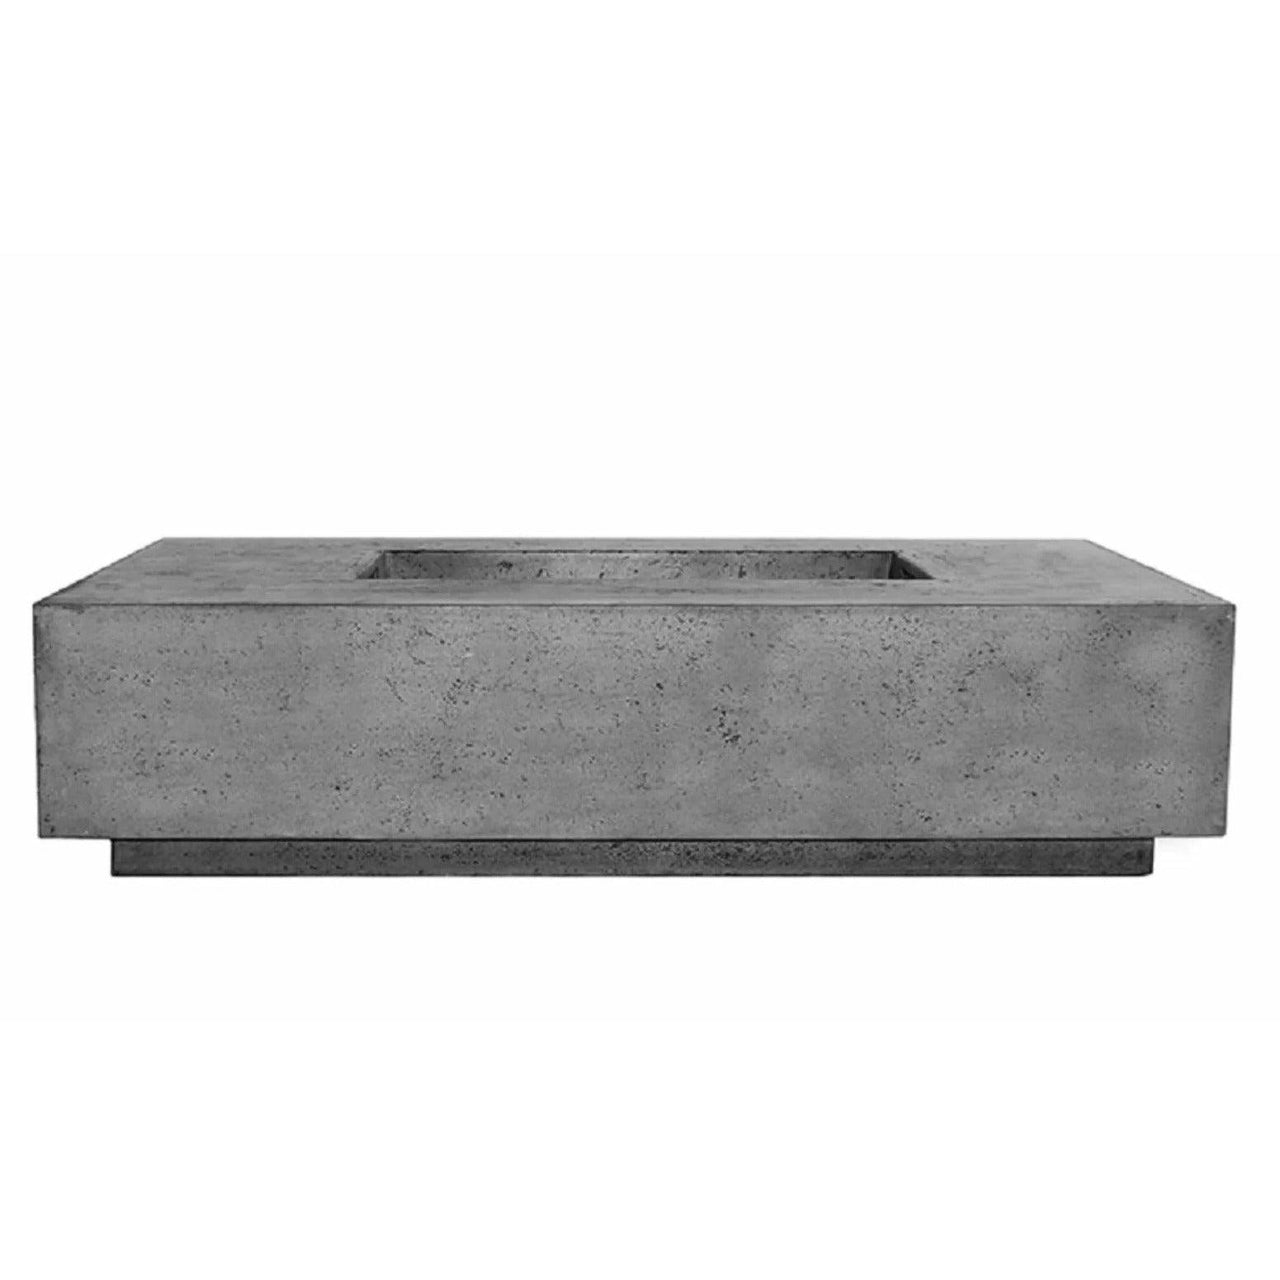 Prism Hardscapes - Tavola Series 8 Rectangular Concrete Fire Pit Table - Fire Pit Stock